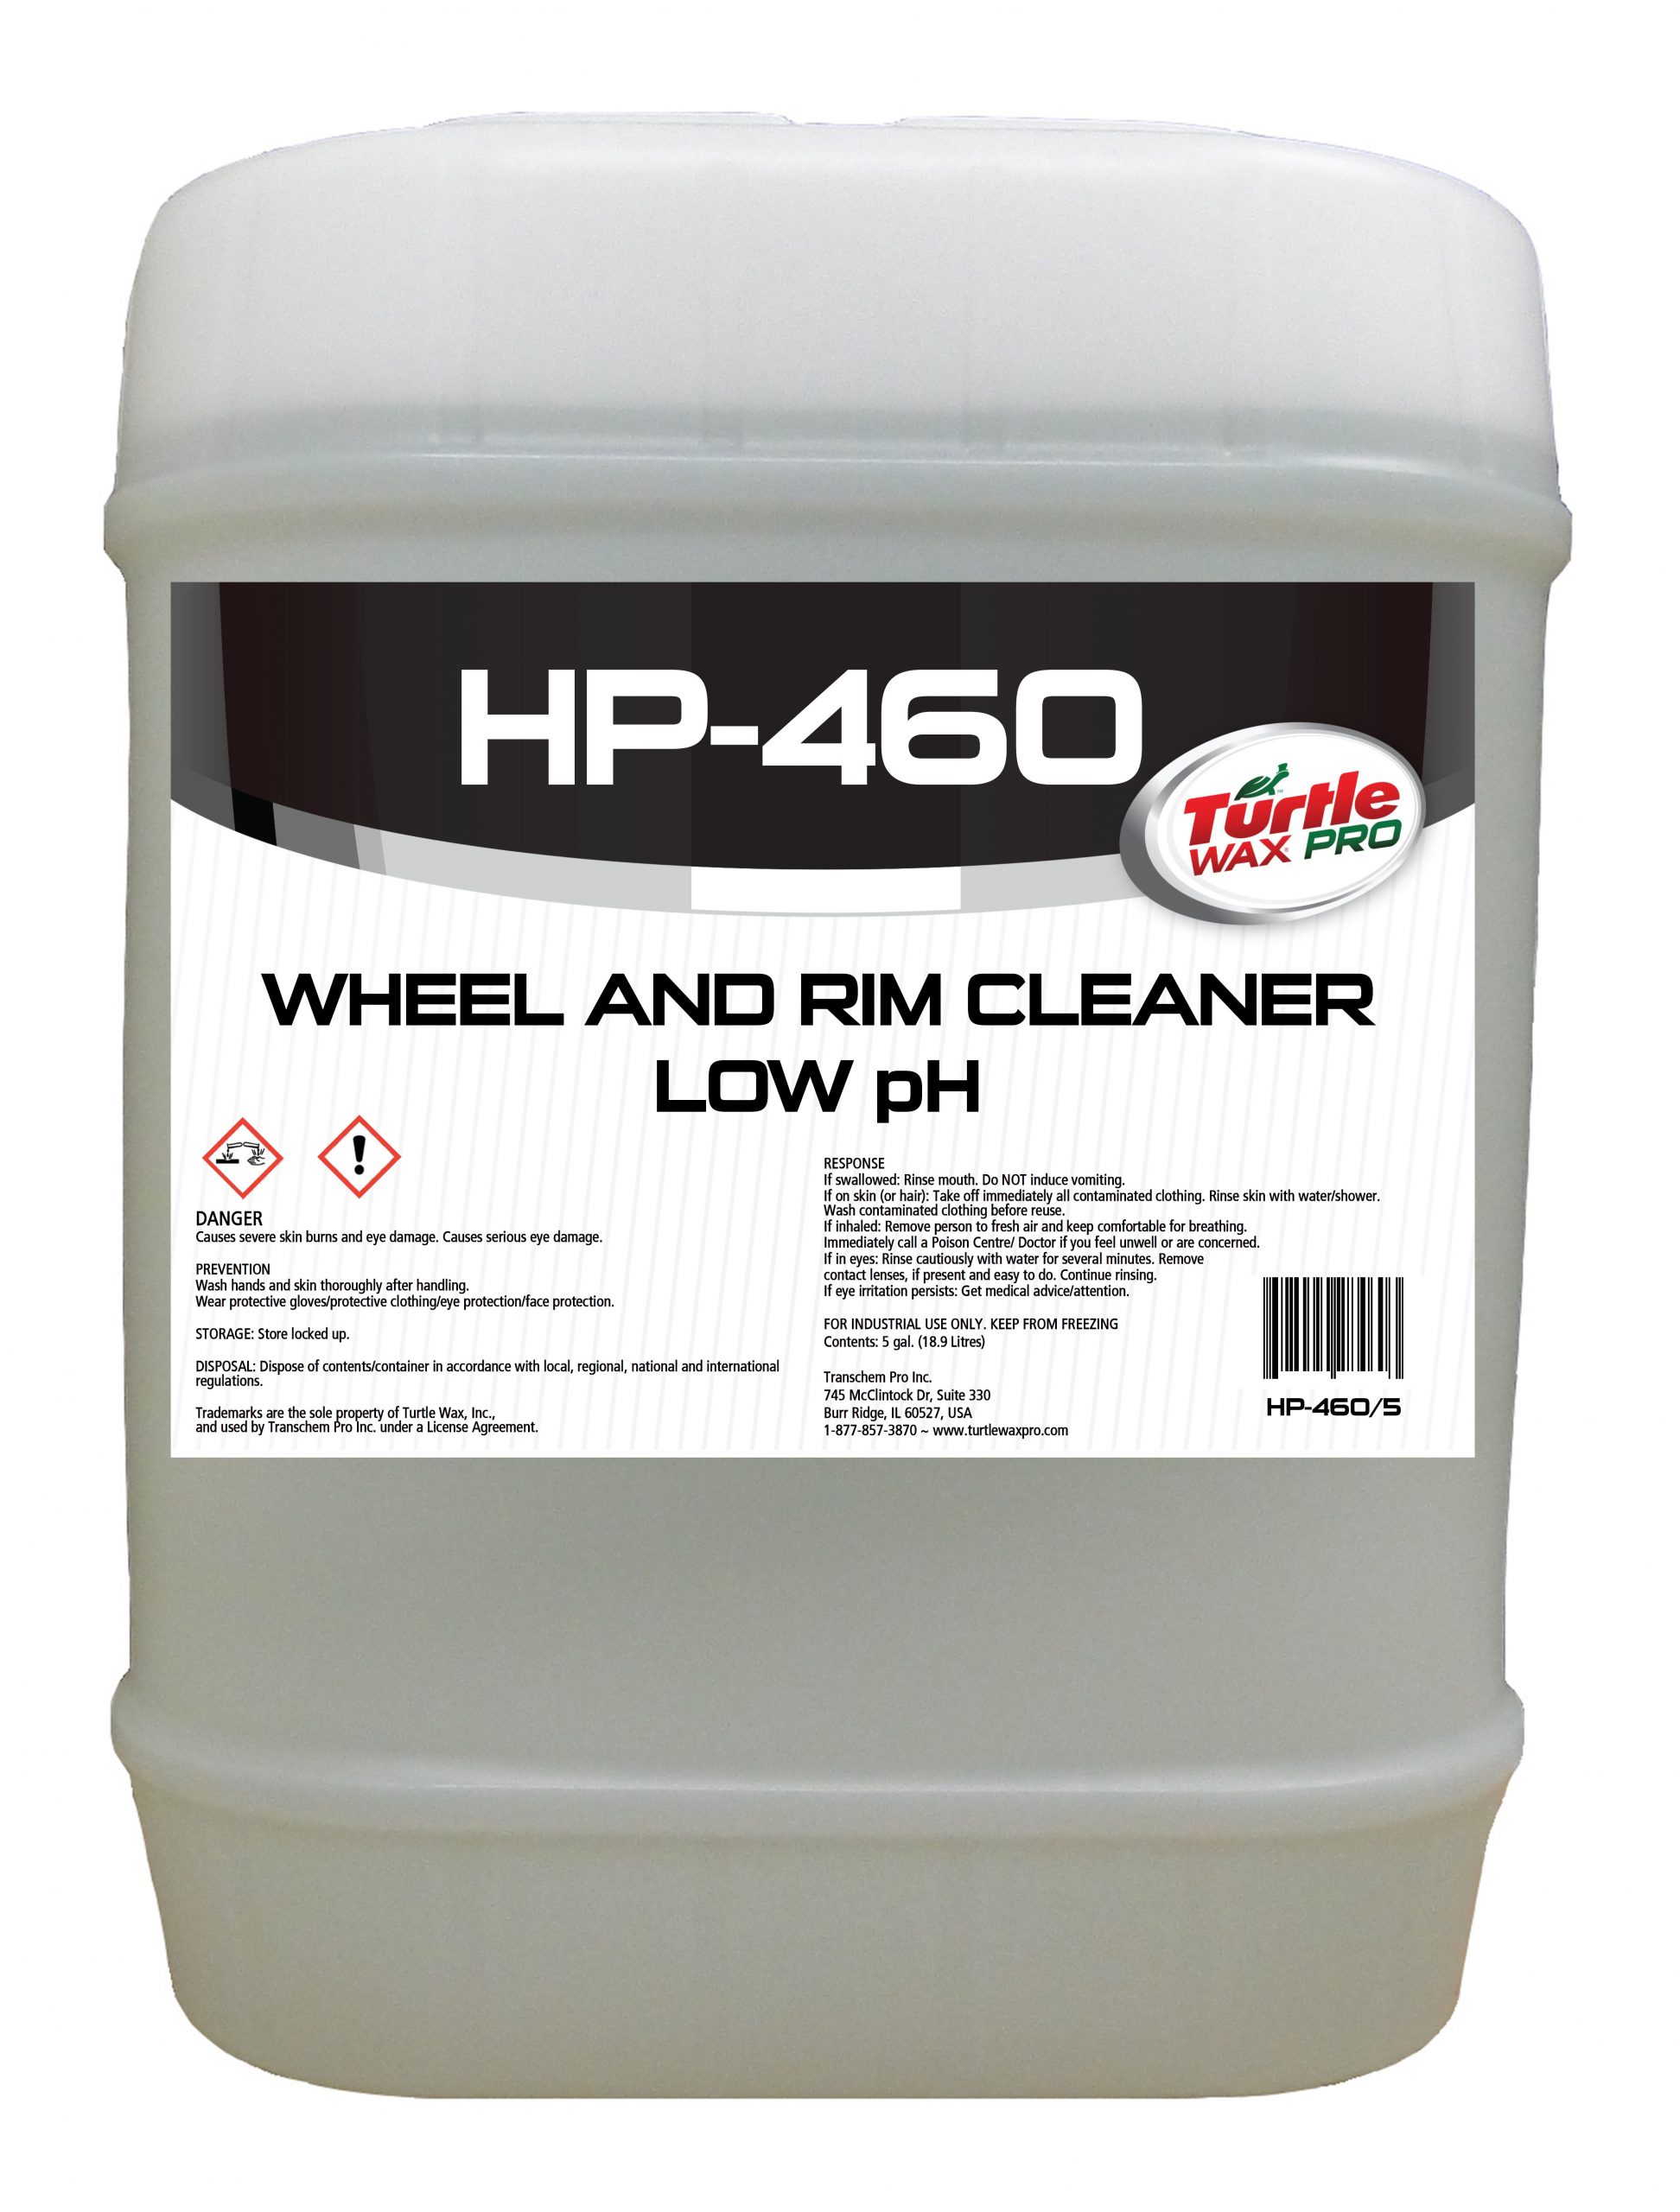 HP-460 Wheel And Rim Cleaner Low pH – My Guy, Inc.